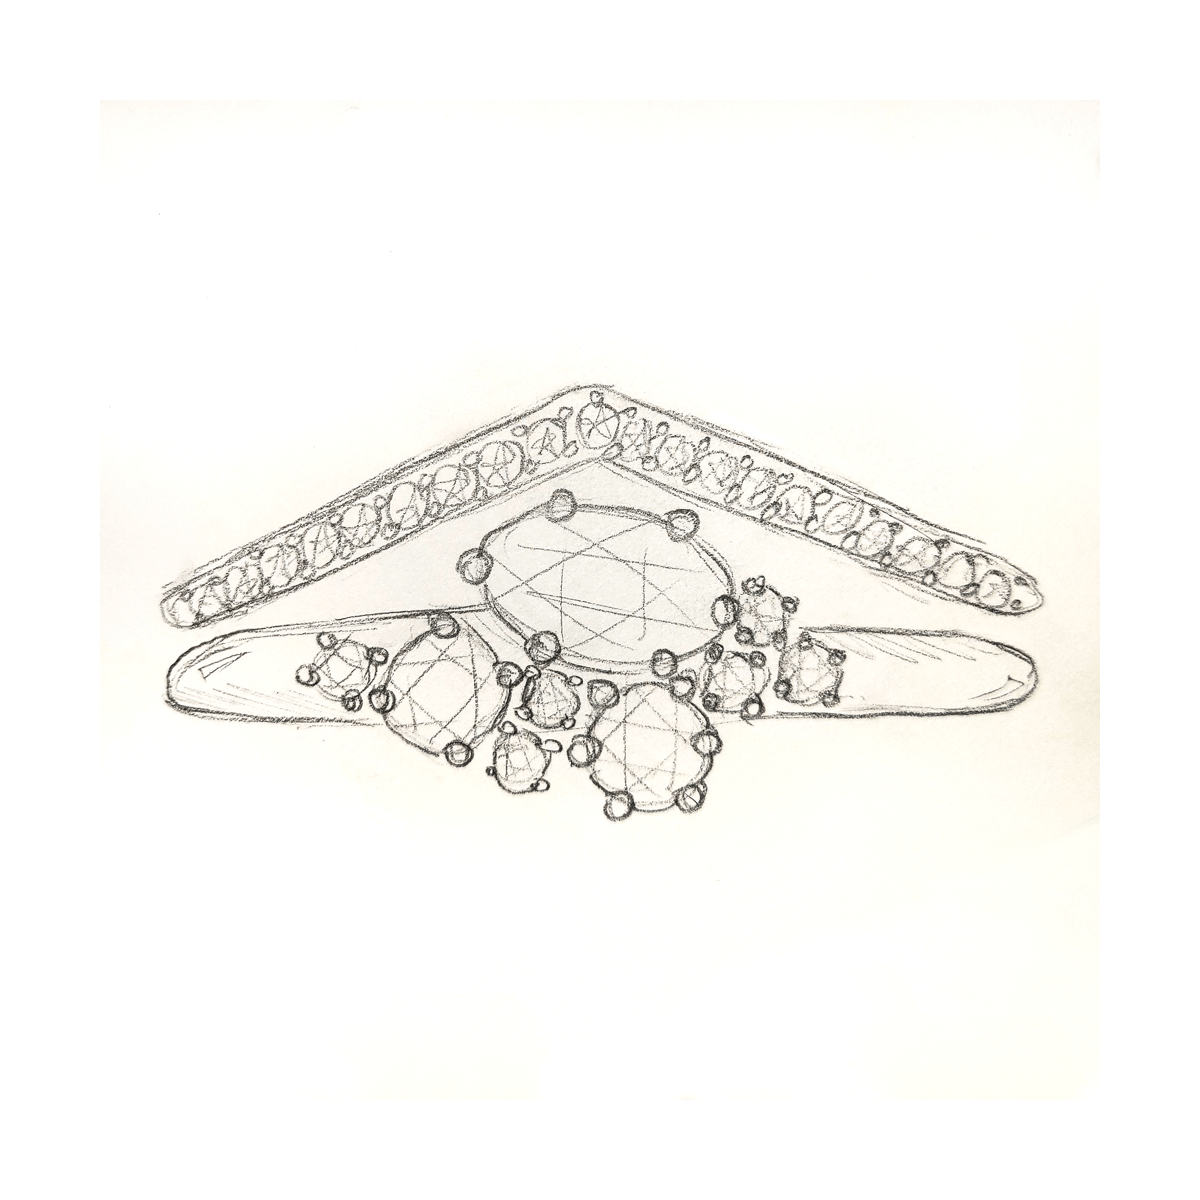 hand drawn image of custom engagement ring and wedding band design